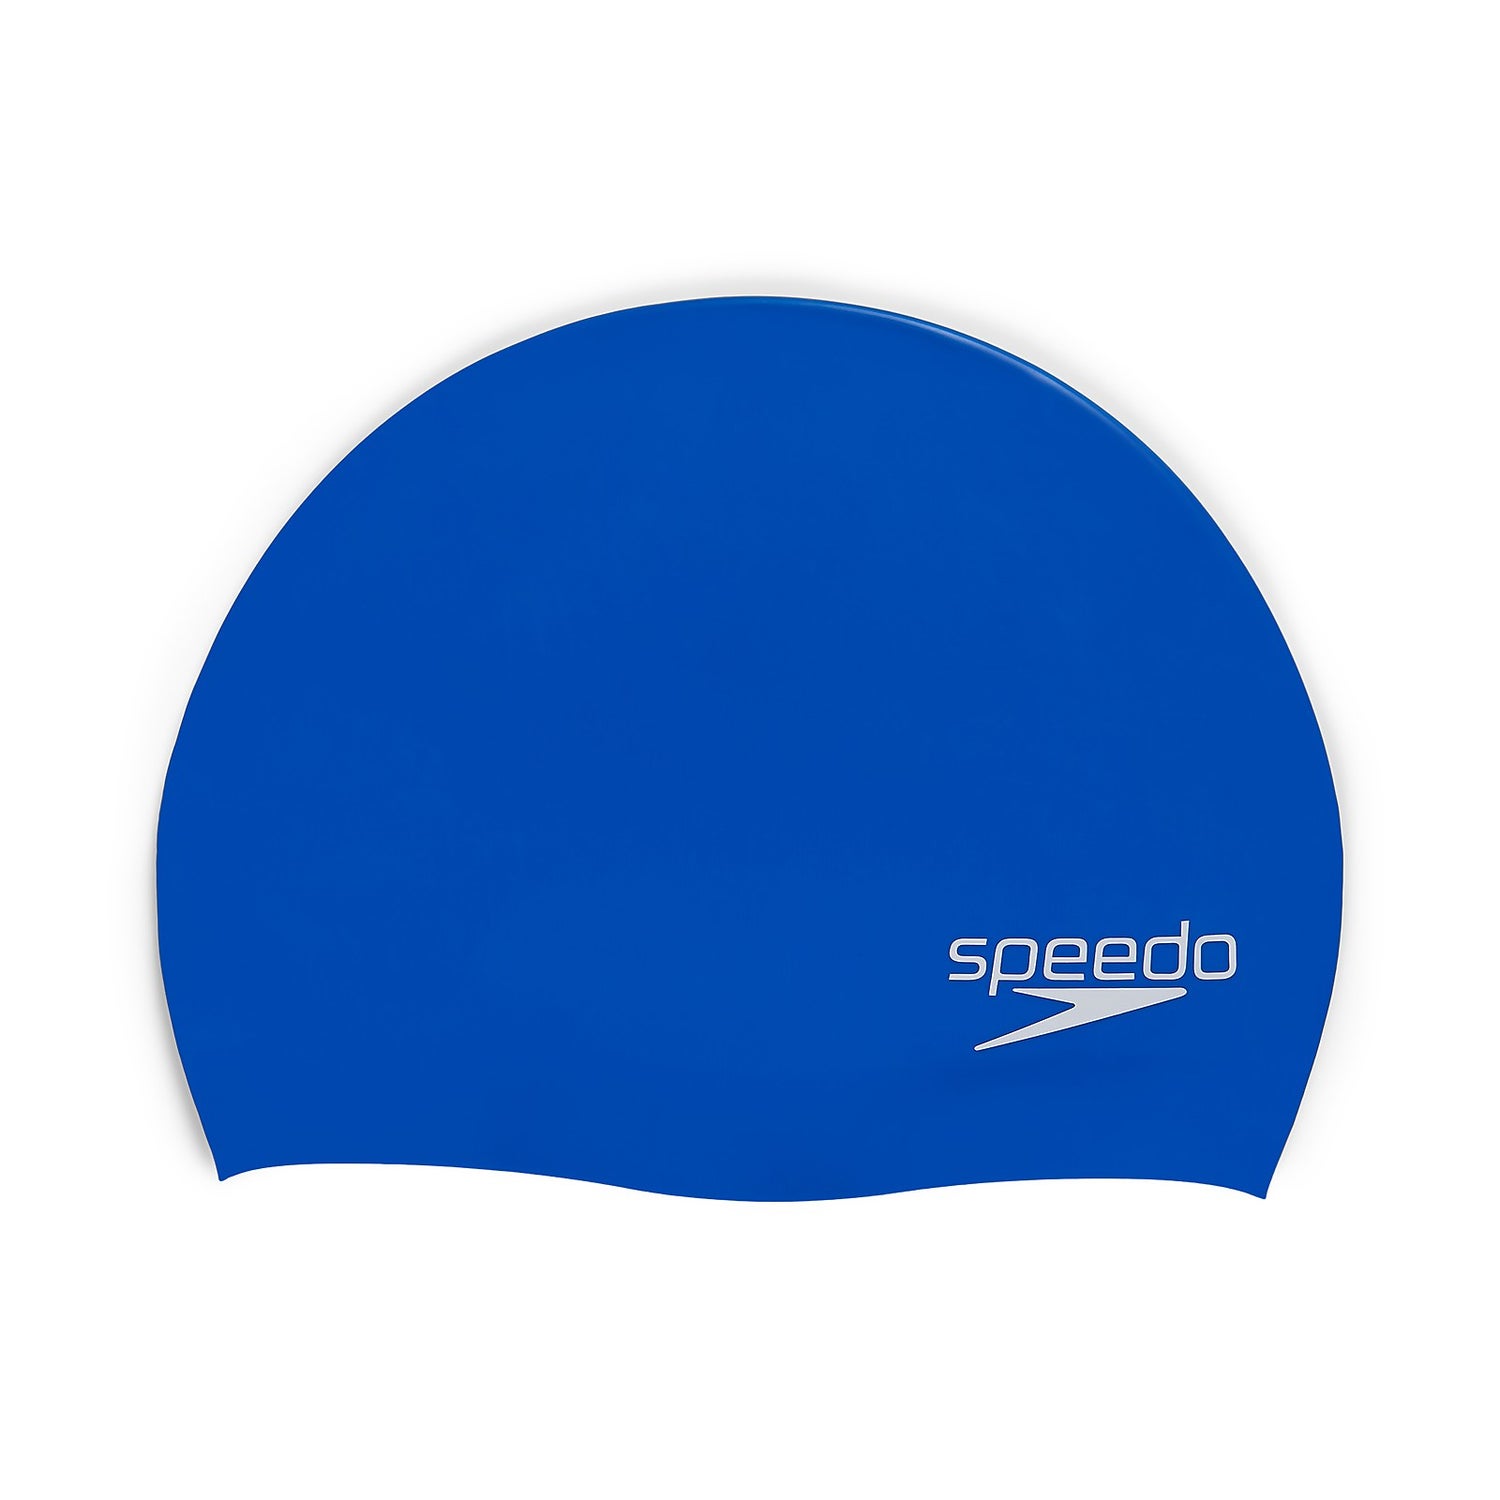 Speedo Solid Silicone Cap - Elastomeric Fit - One Size - Blue